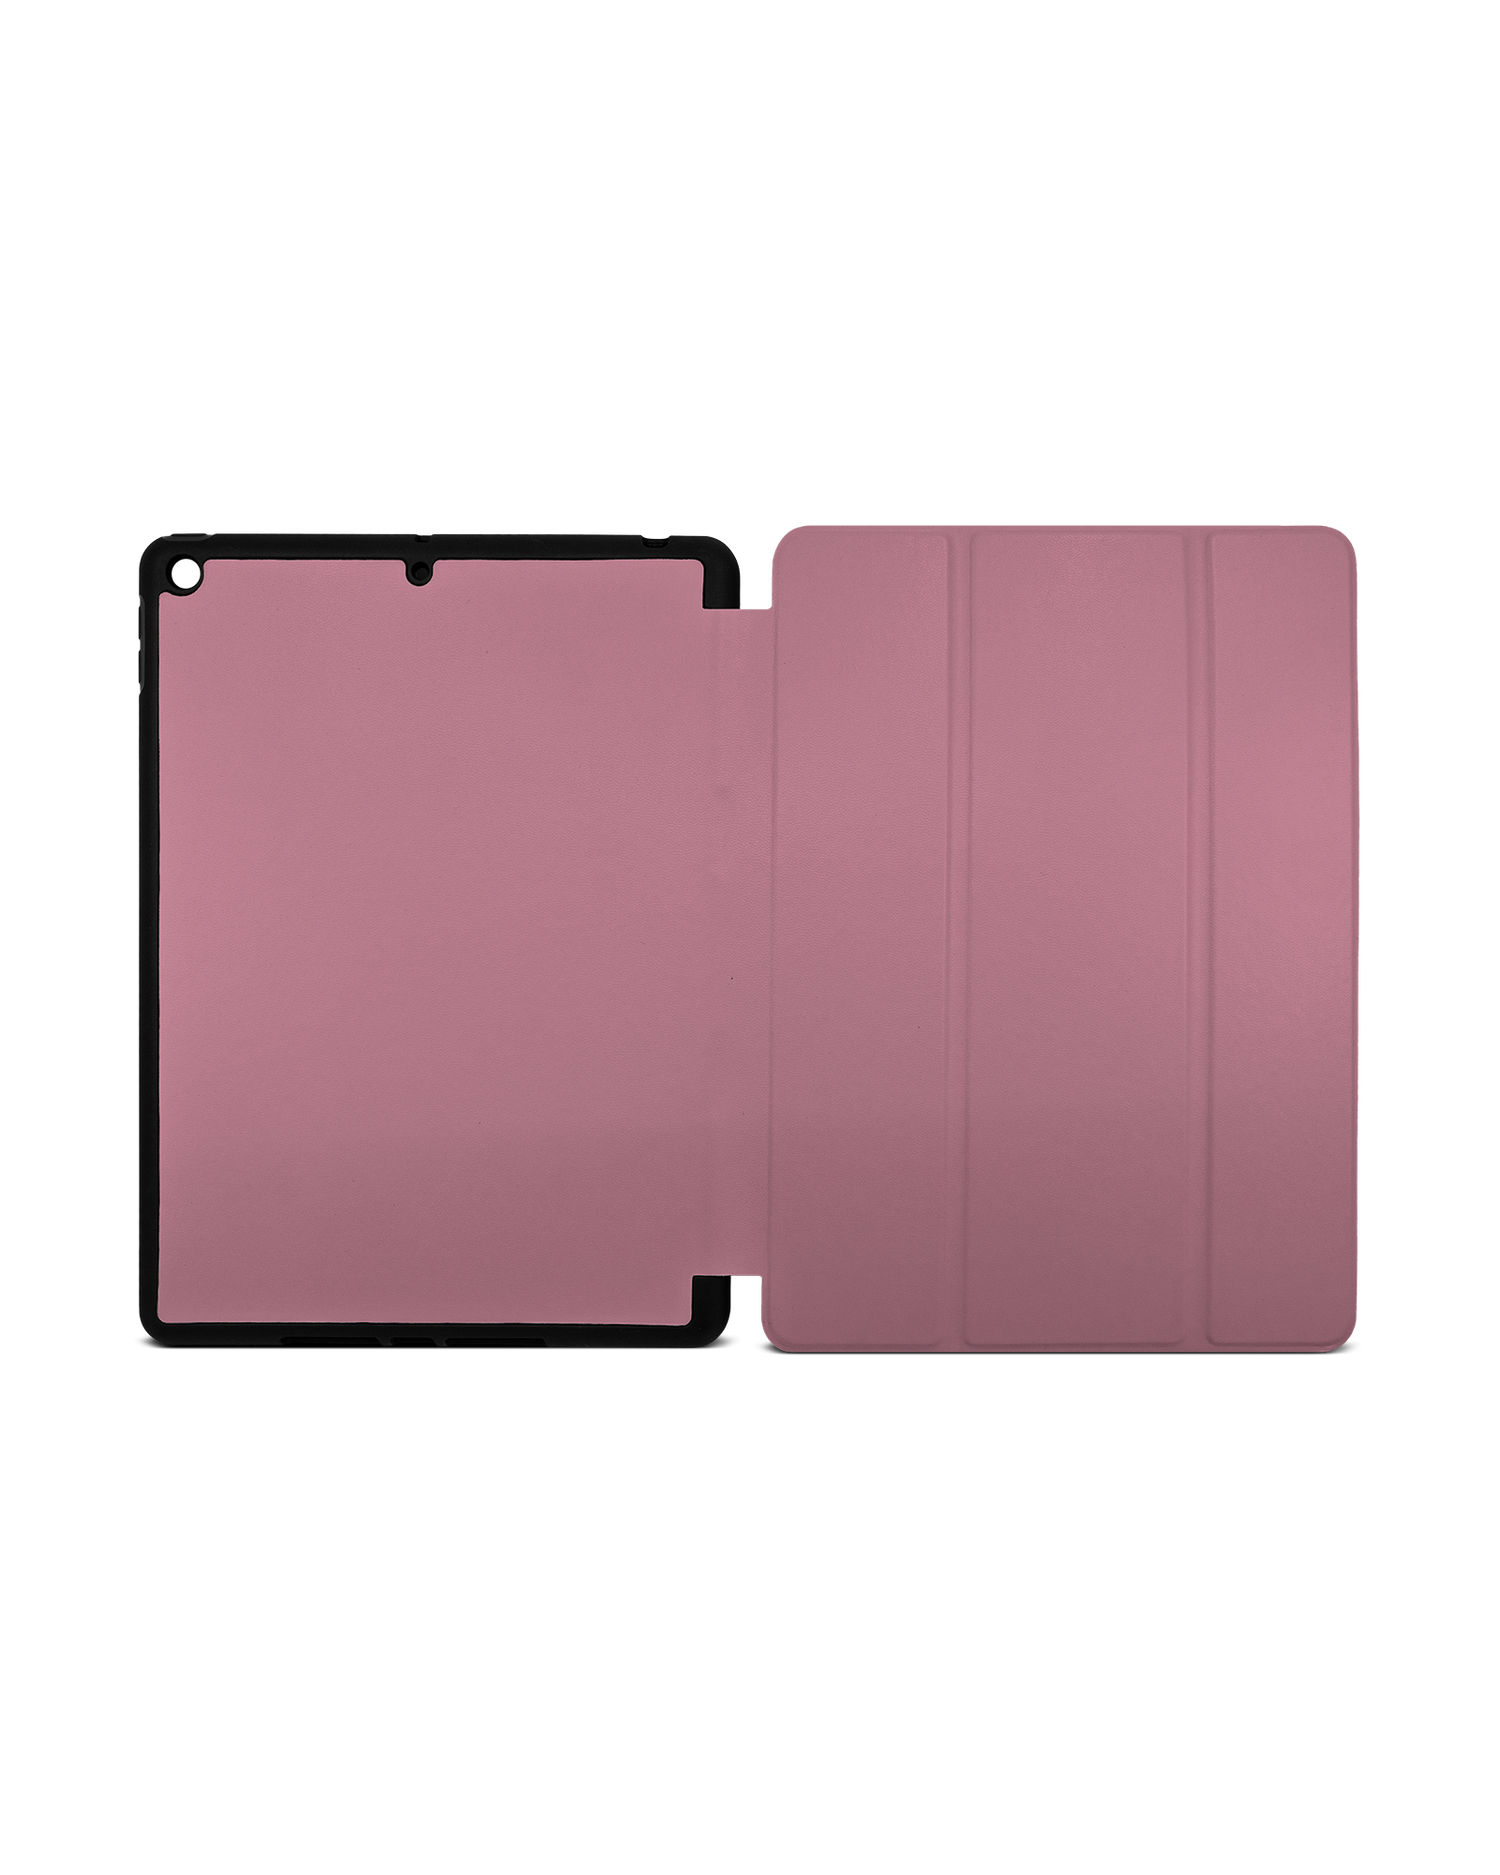 WILD ROSE iPad Case with Pencil Holder Apple iPad 9 10.2